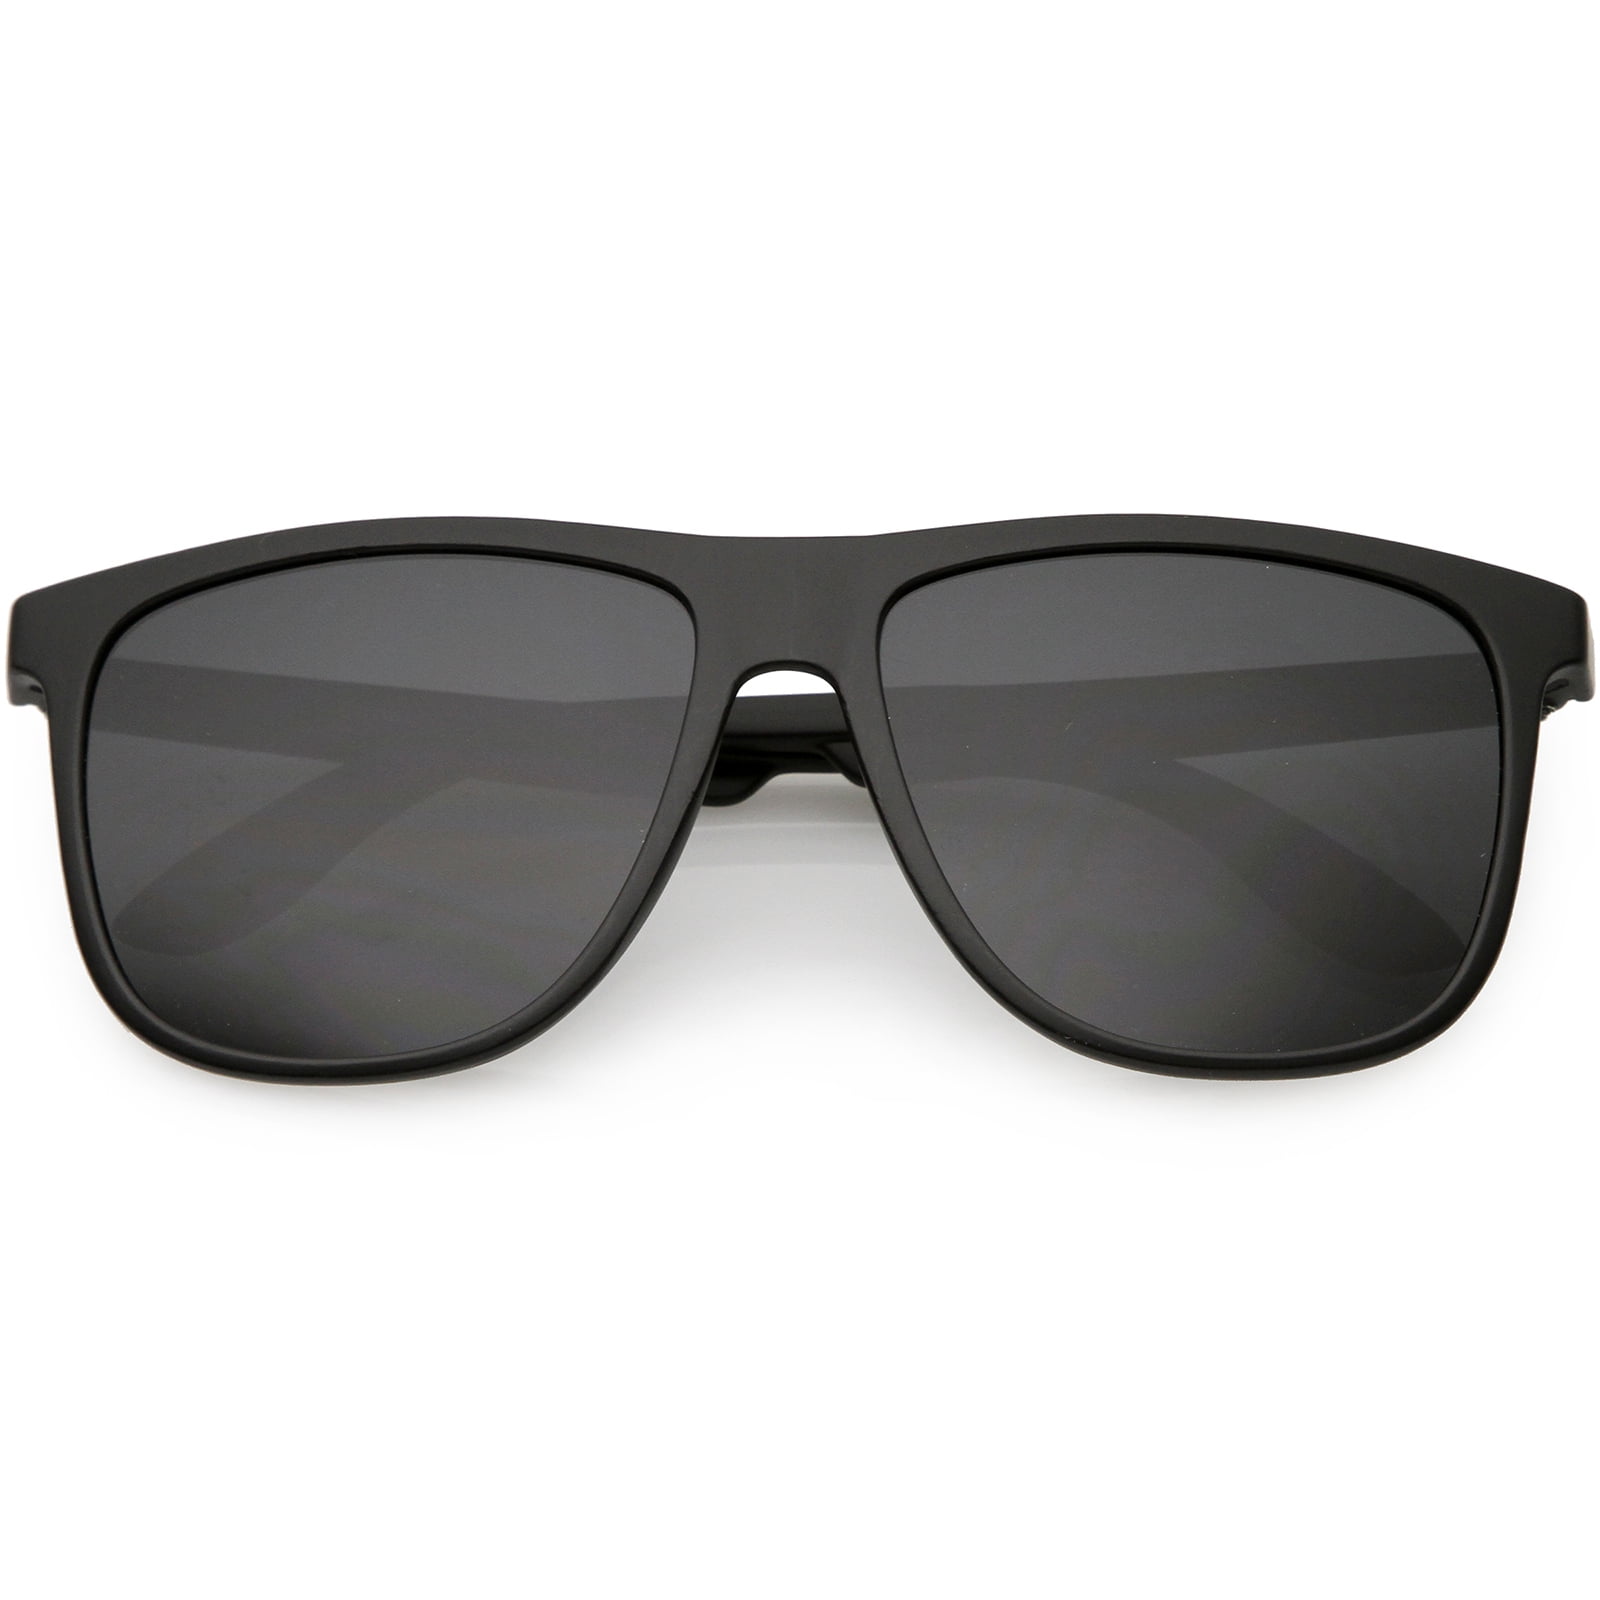 Modern Horn Rimmed Sunglasses Slim Arms Square Flat Lens 56mm (Matte ...